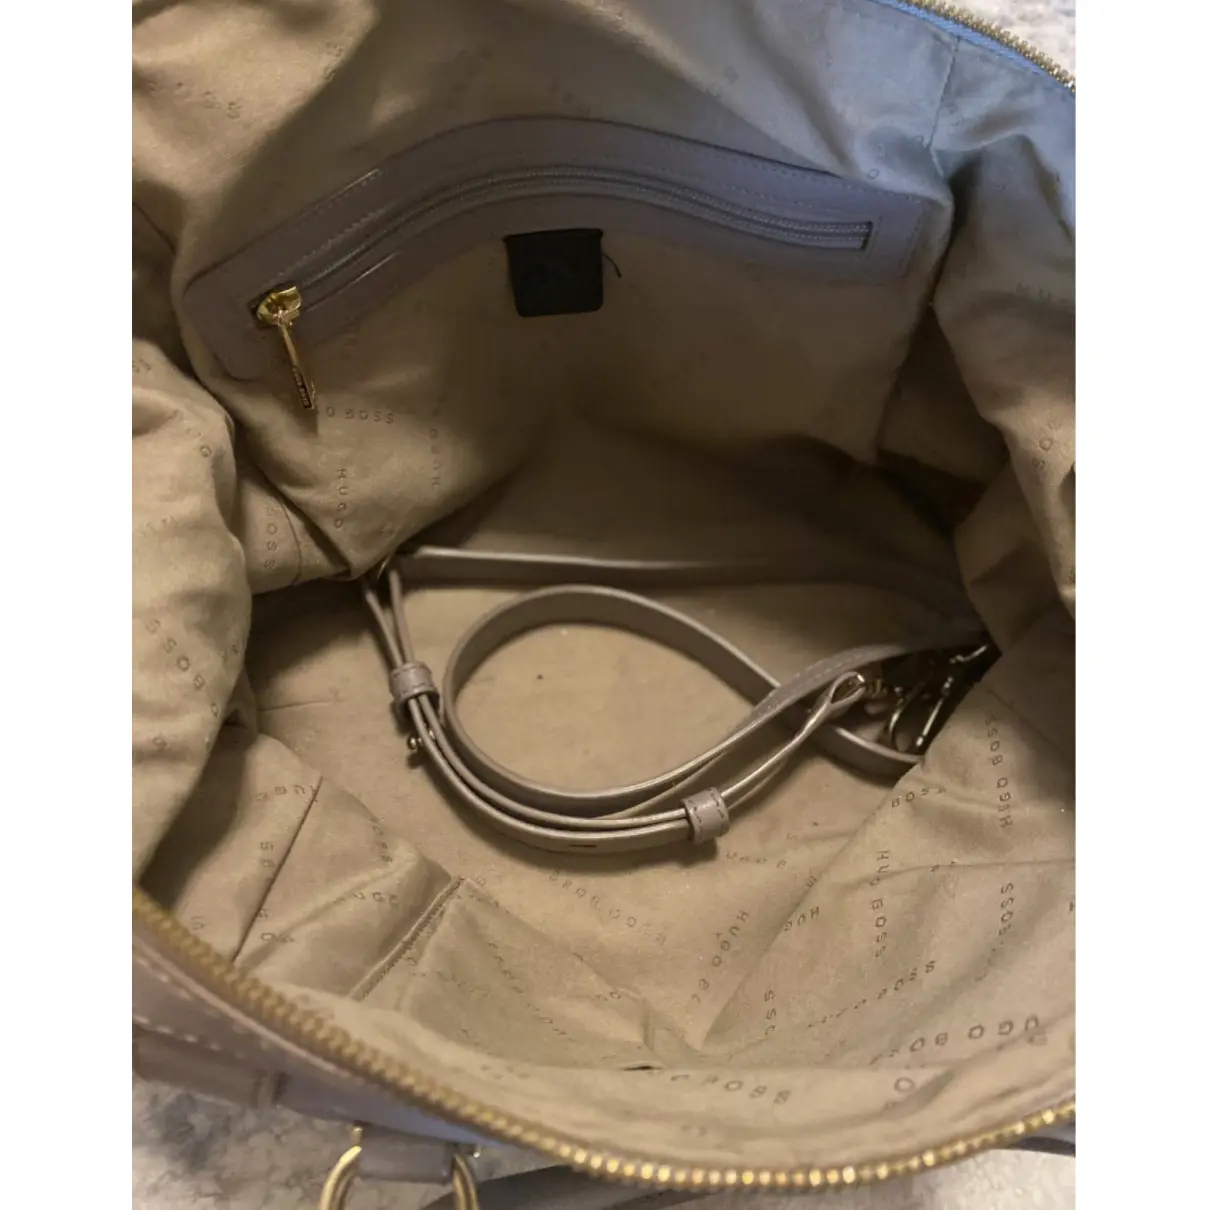 Leather handbag Hugo Boss